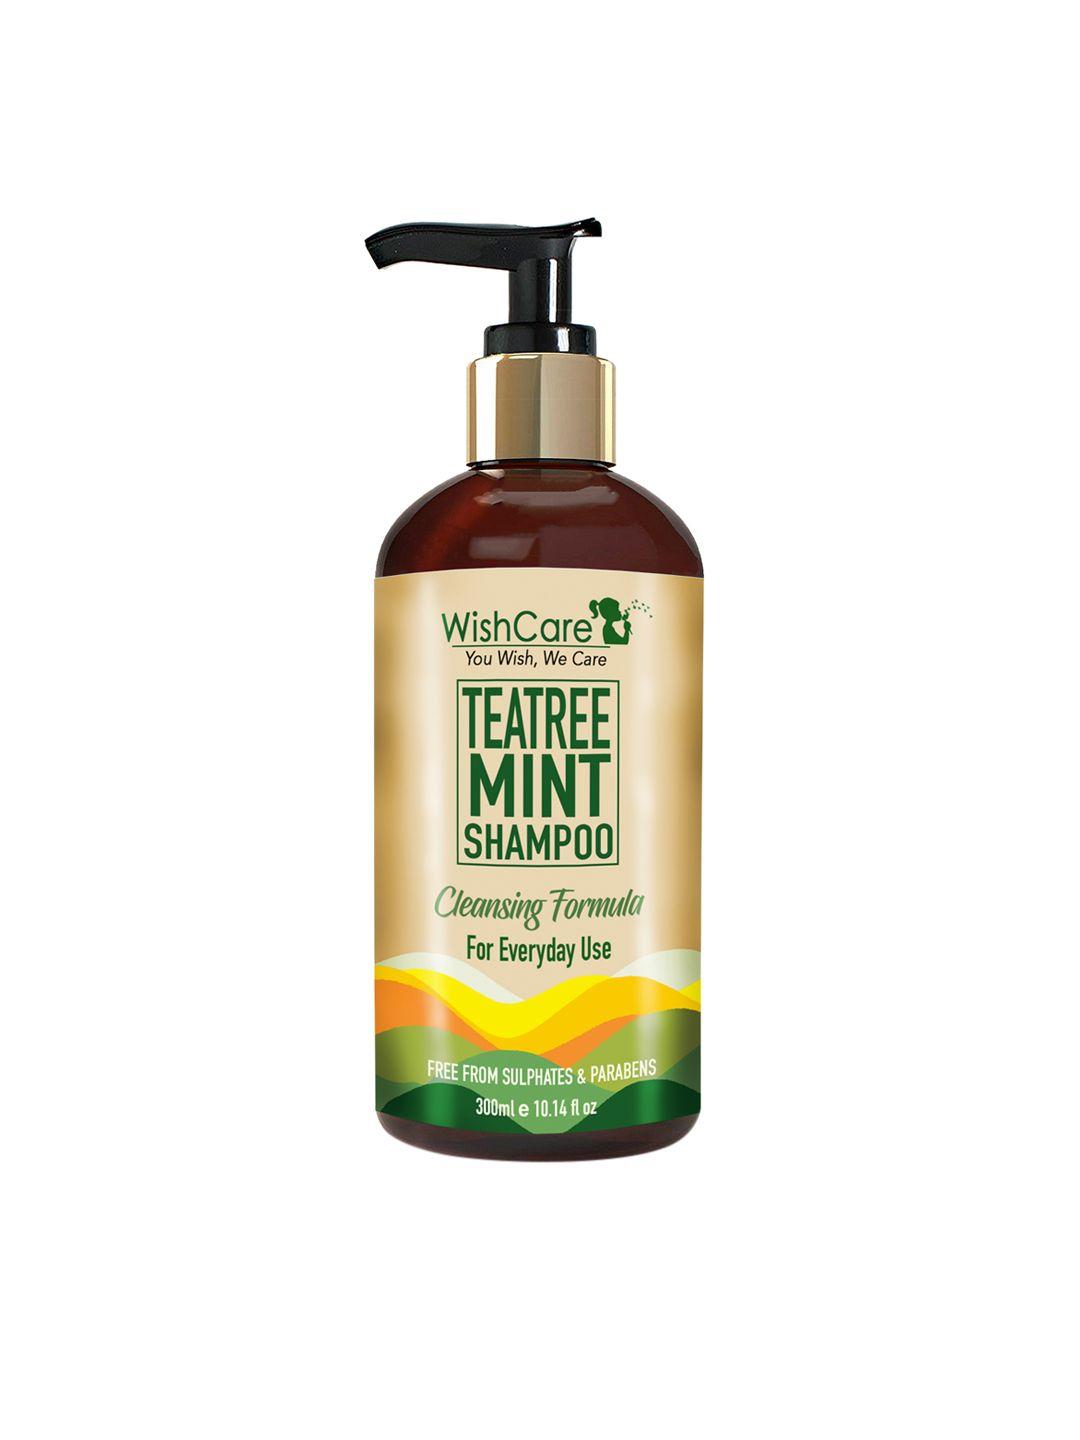 wishcare unisex tea tree mint shampoo - cleansing formula 300 ml